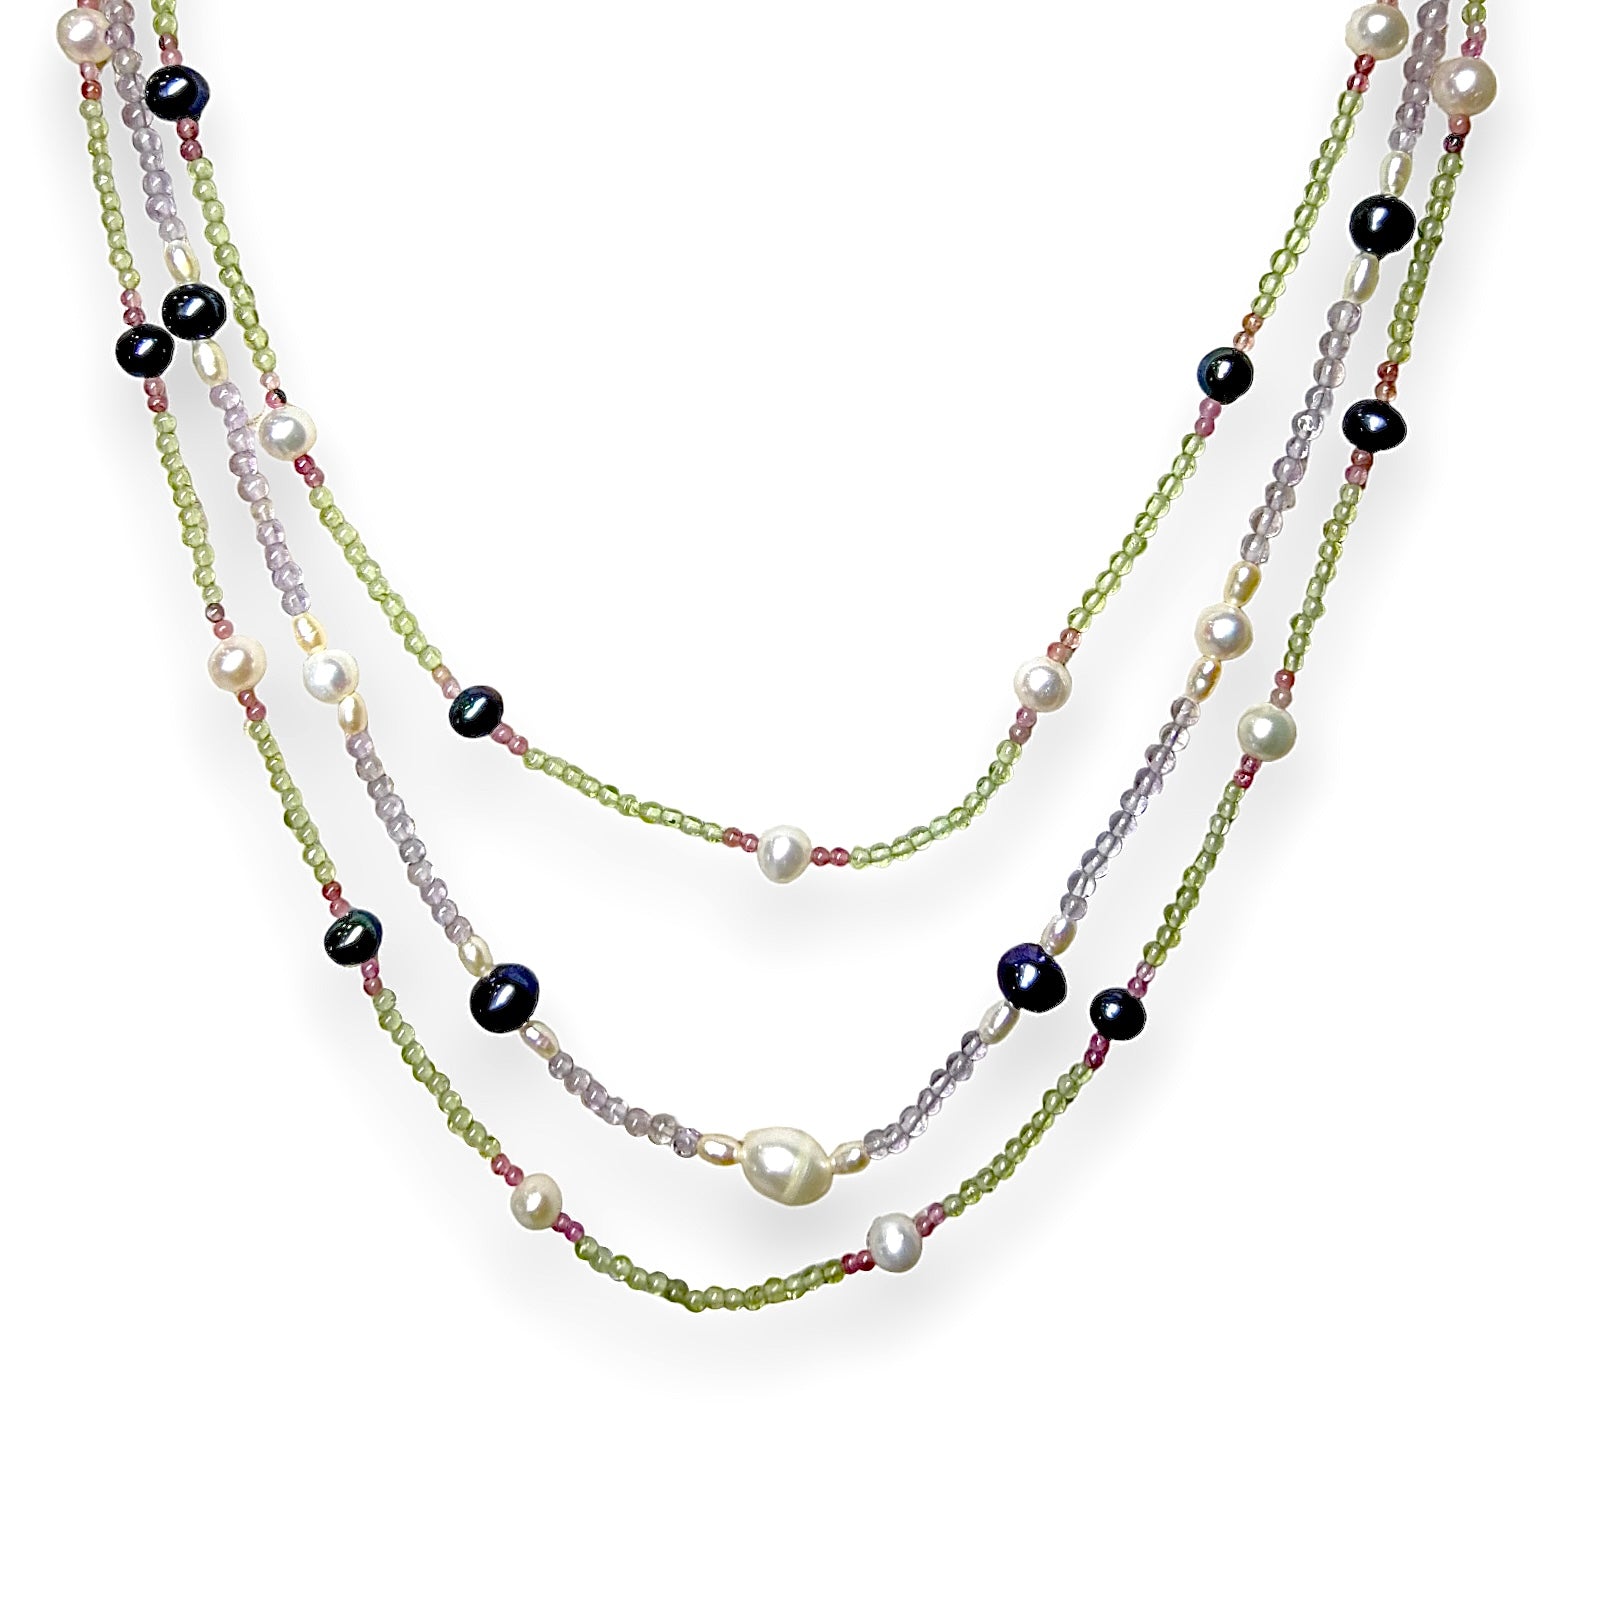 Natural Handmade Necklace 16"-18" Amethyst, Peridot, Pearls Gemstone Beads Jewellery